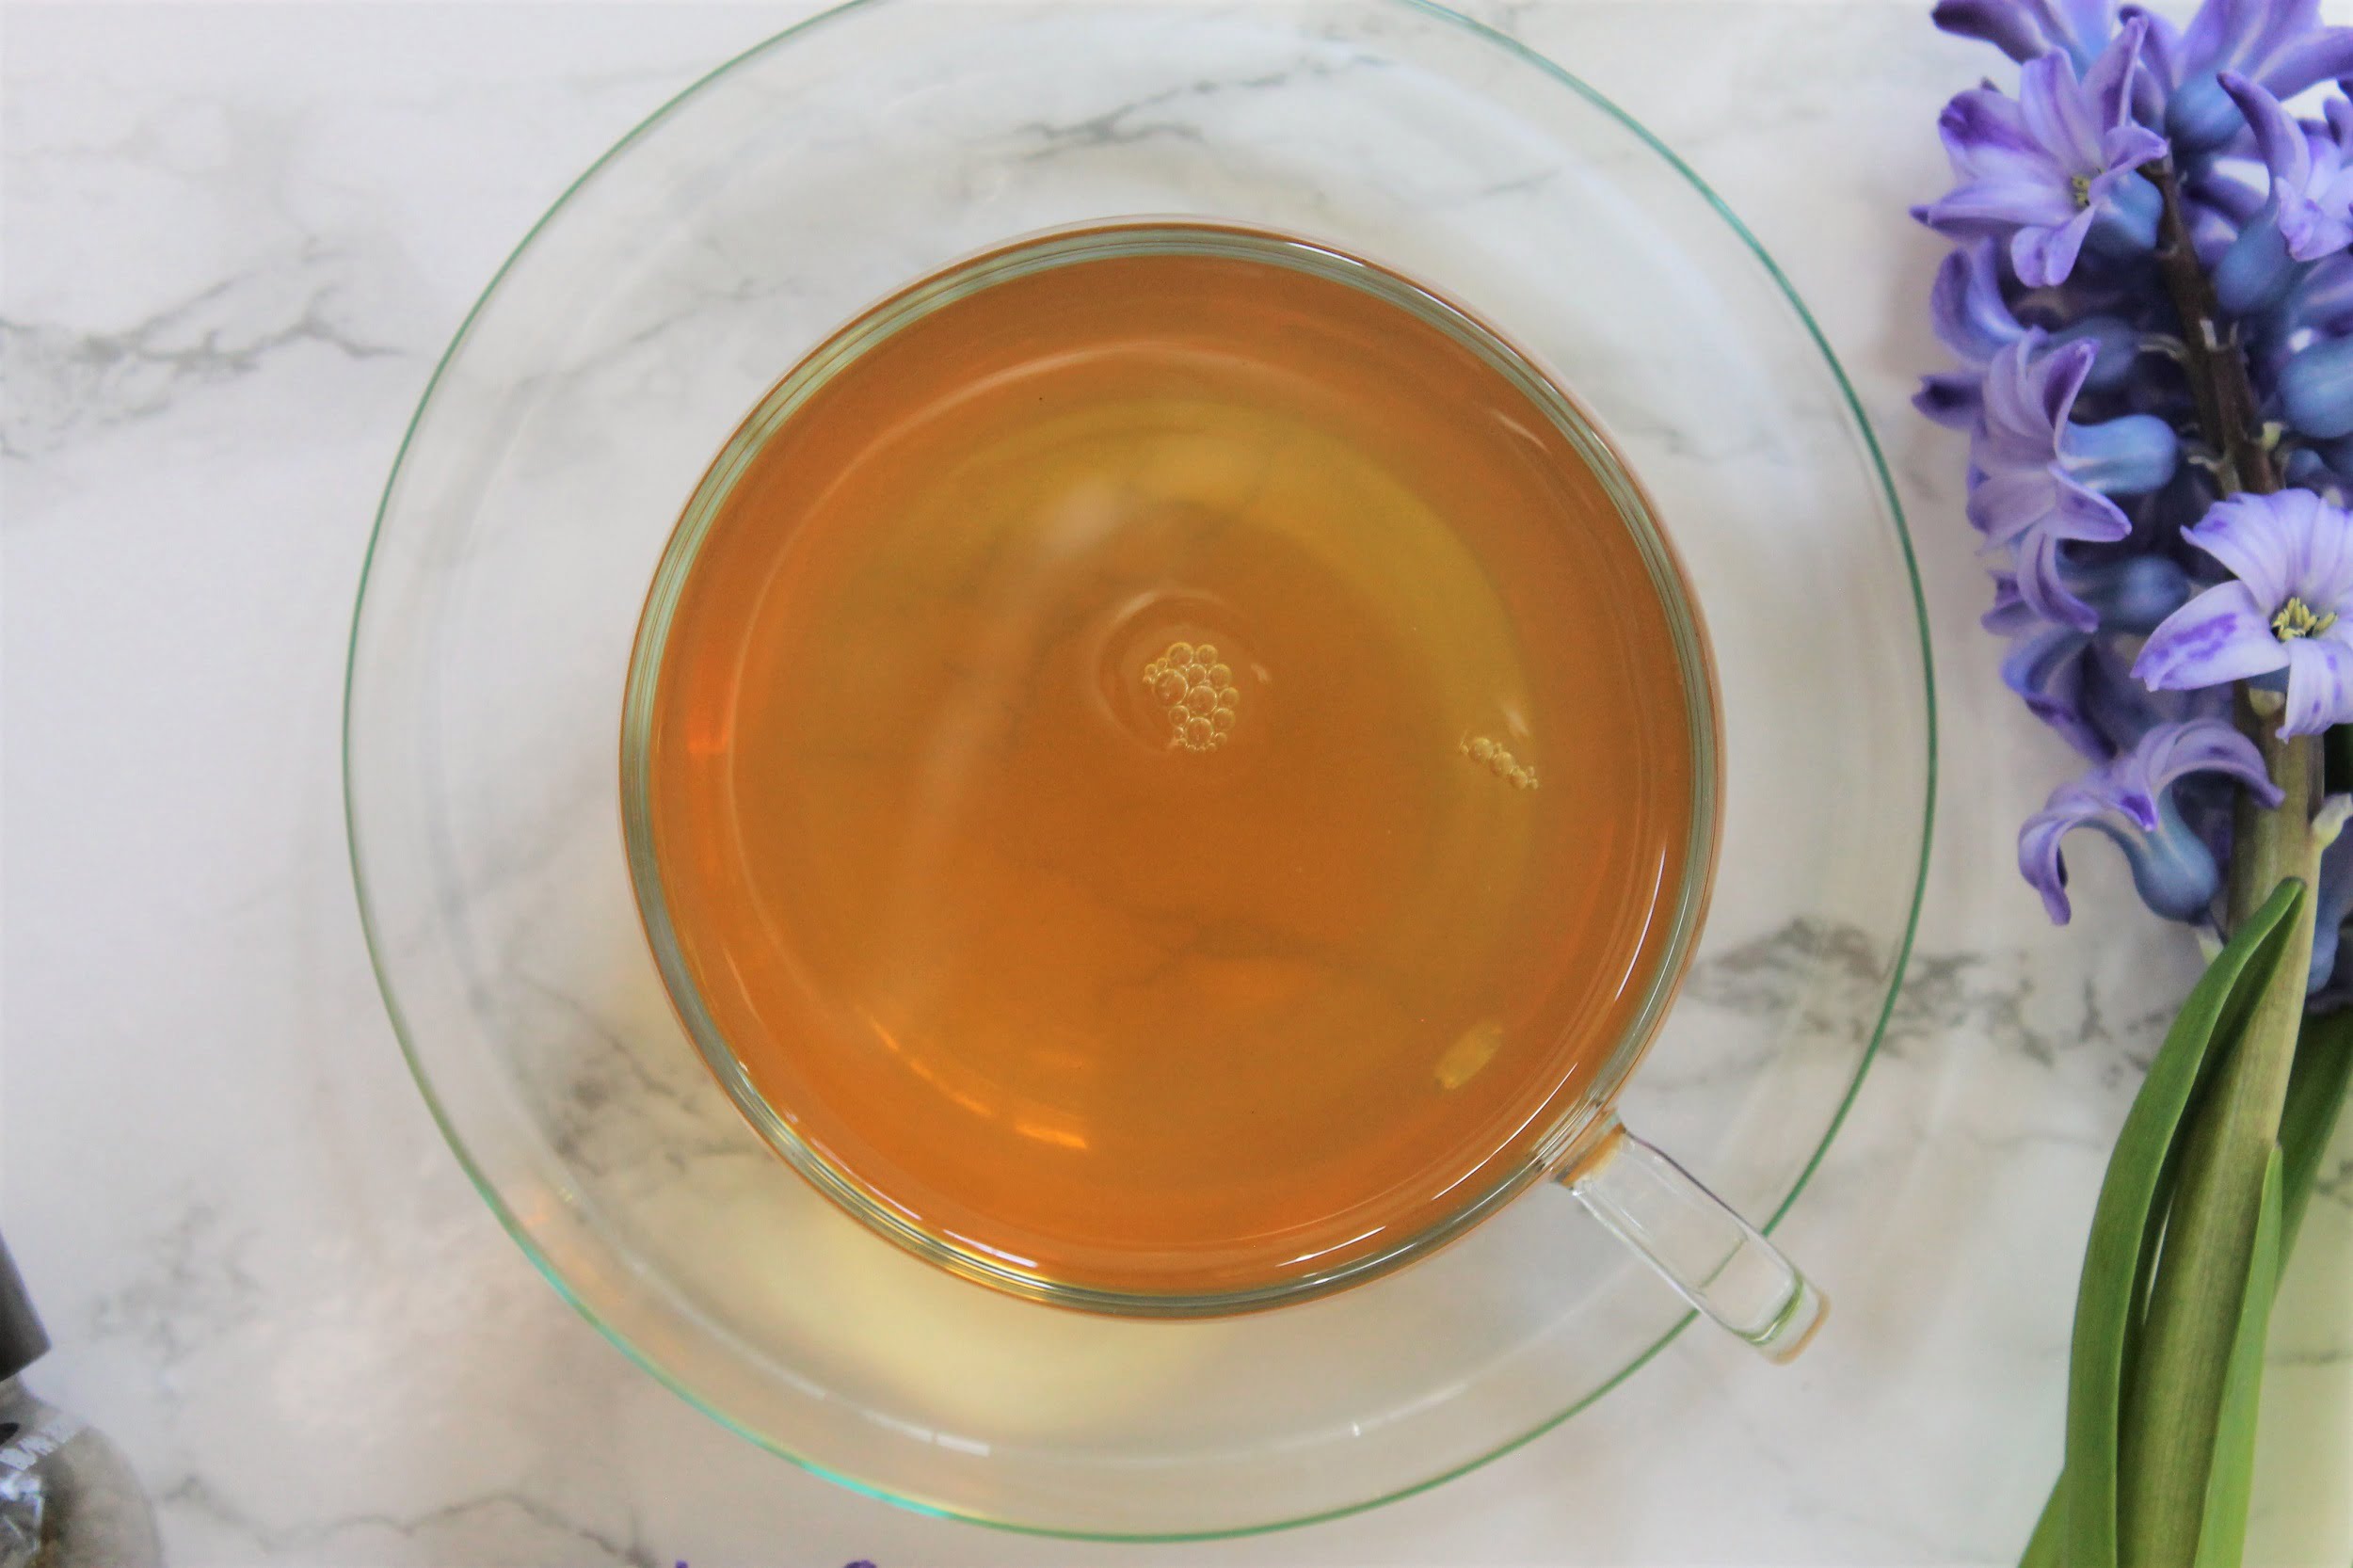 gold green tea in glass teacup